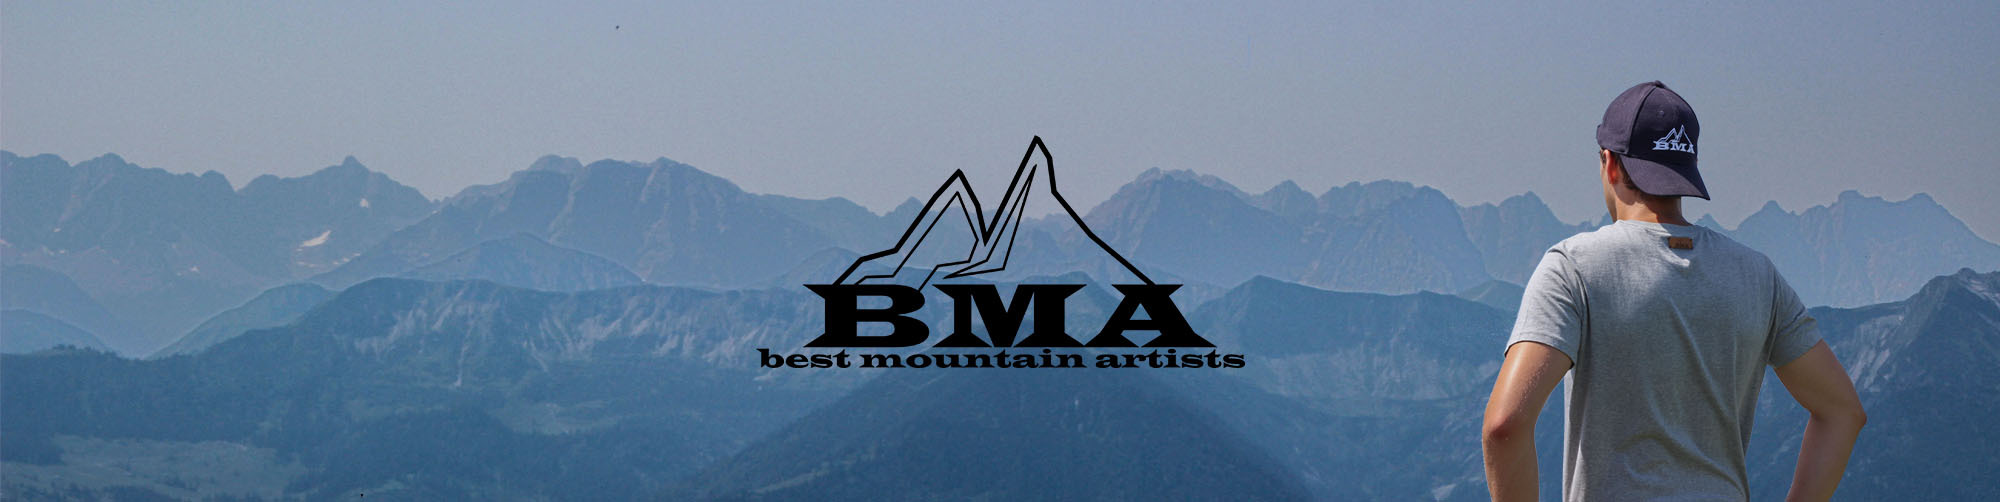 Best Mountain Artists